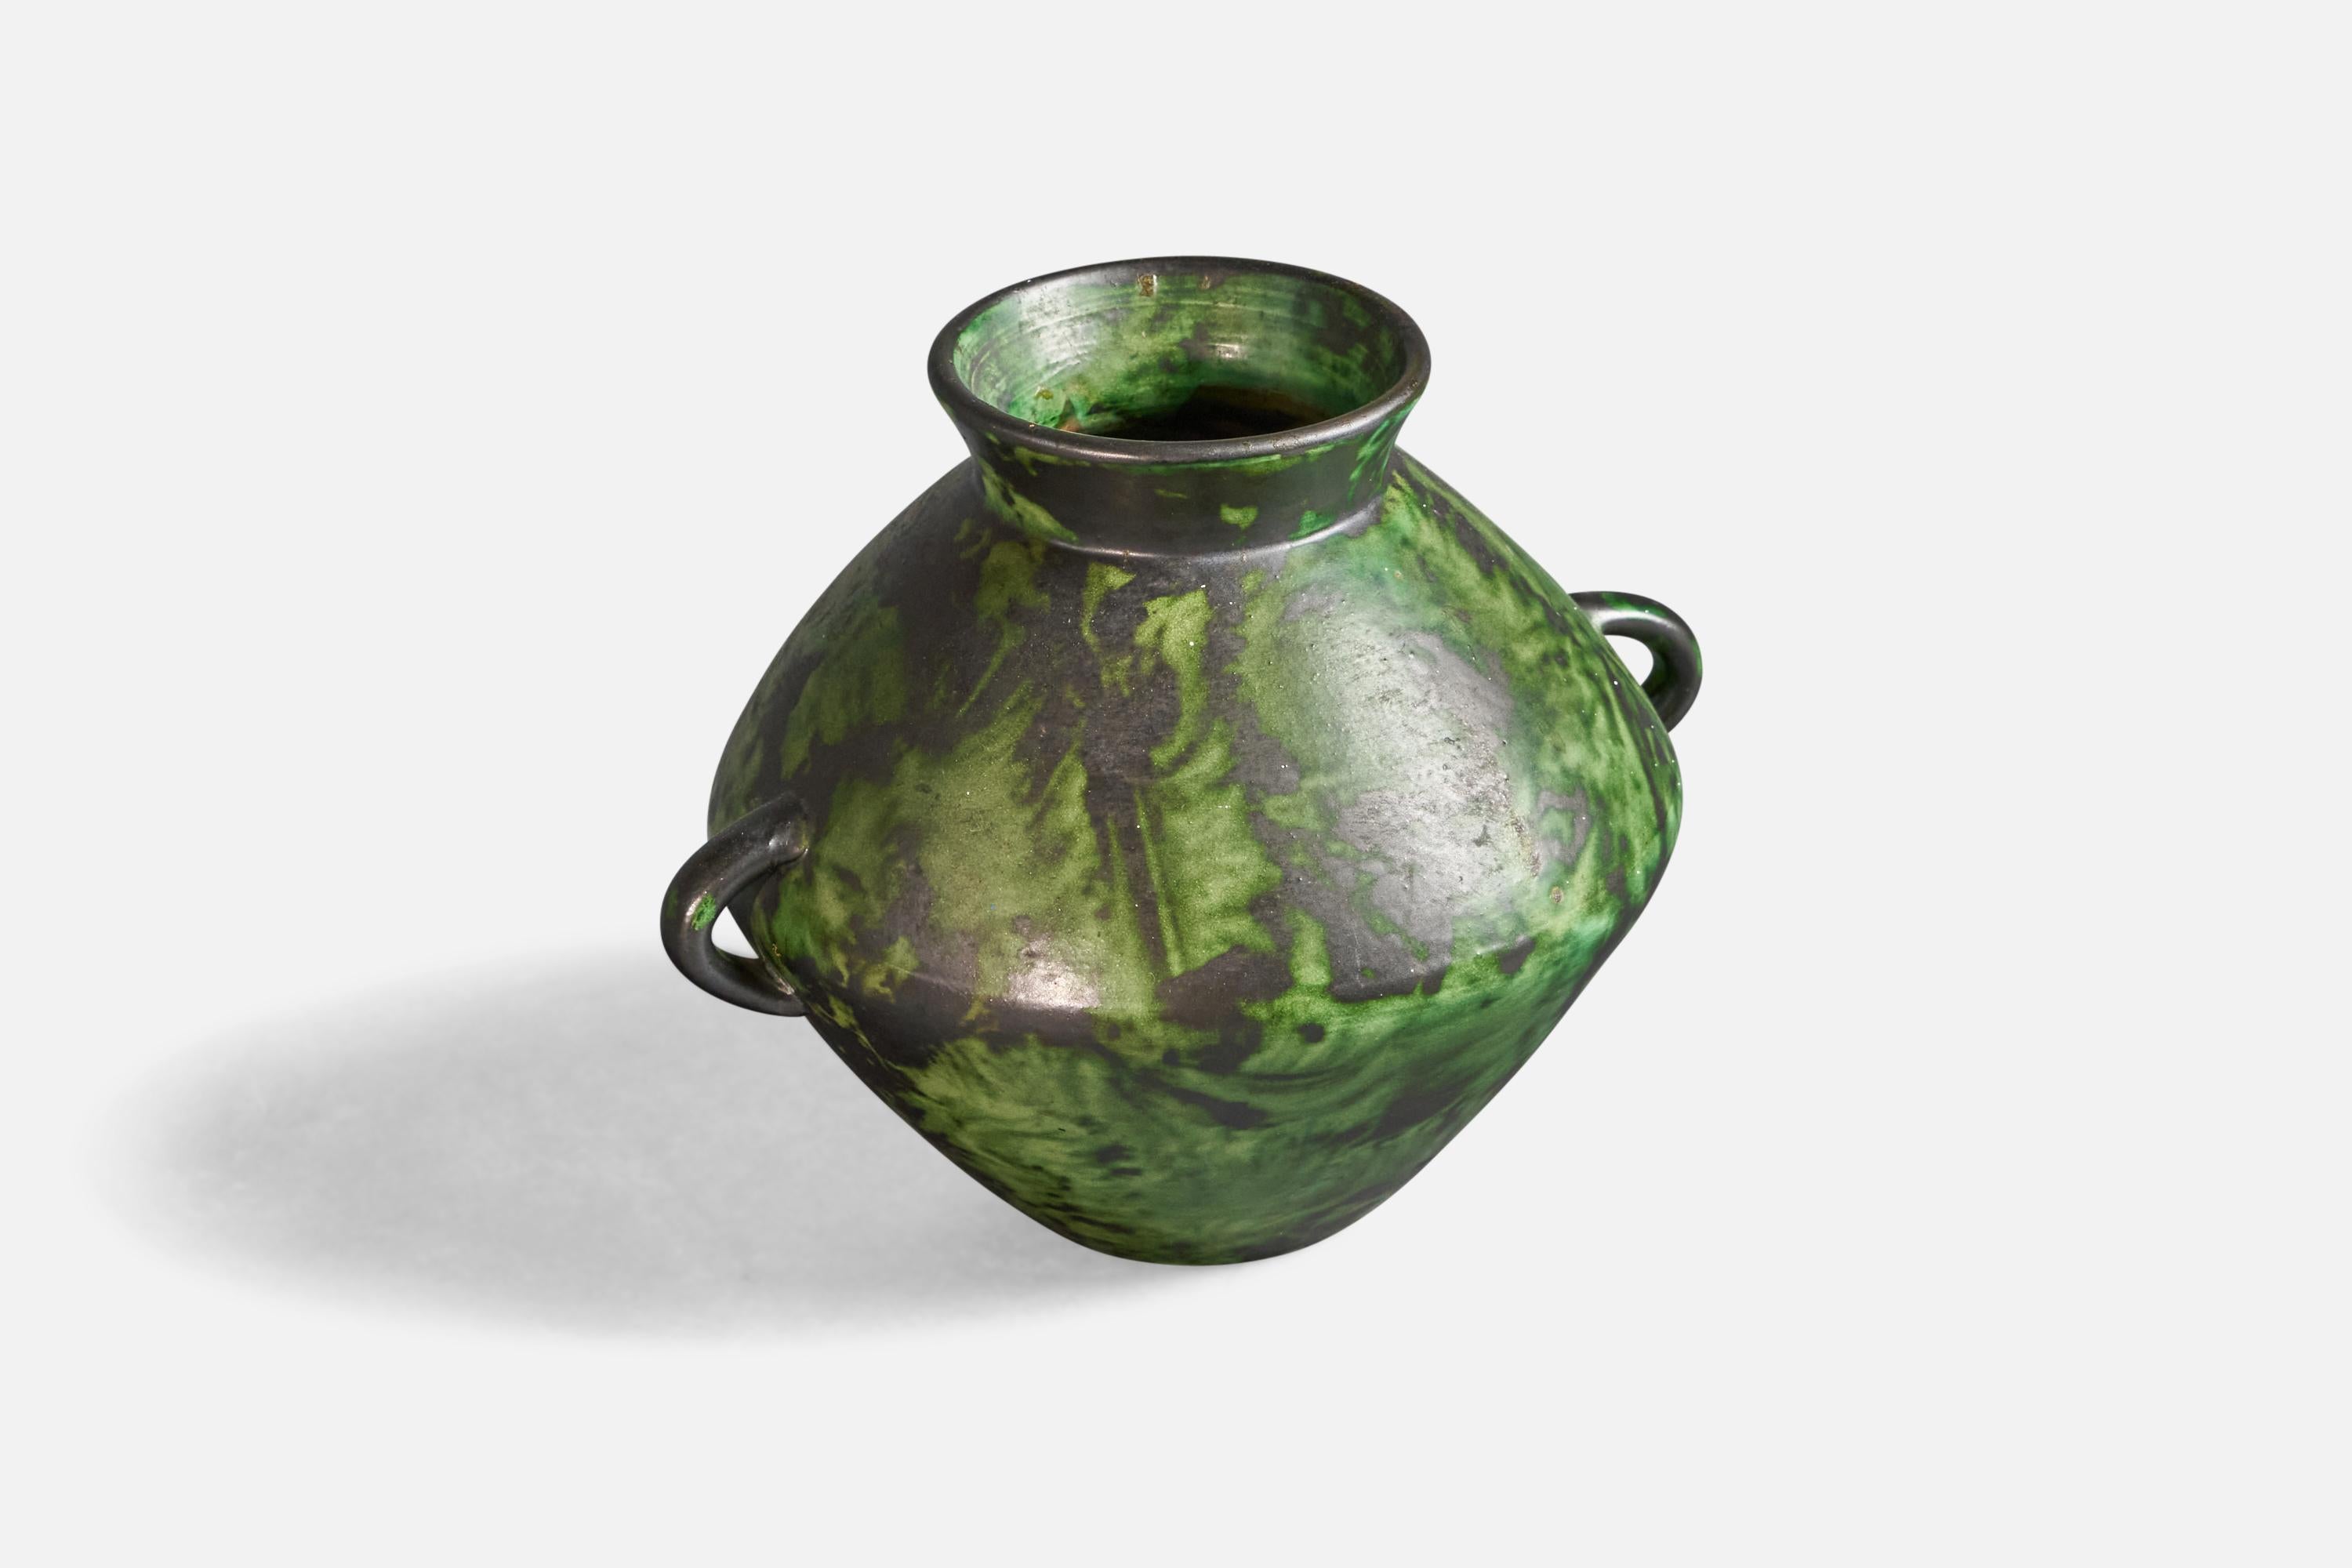 A green-glazed earthenware vase, designed by Erik Mornils and produced by Nittsjö, Sweden, c. 1930s.